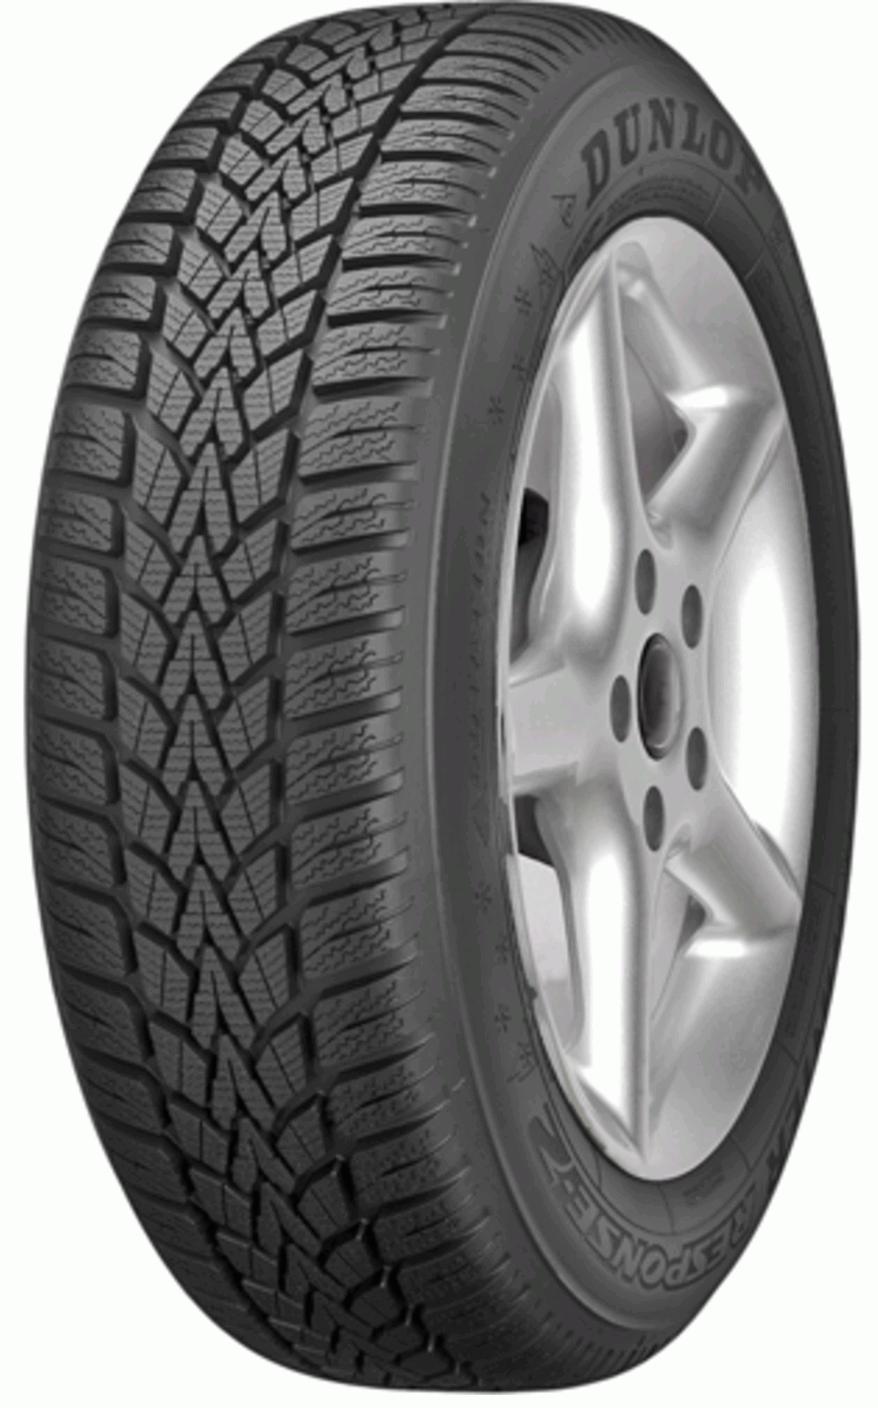 Dunlop Winter Response 2 - Tire Reviews and Tests | Autoreifen